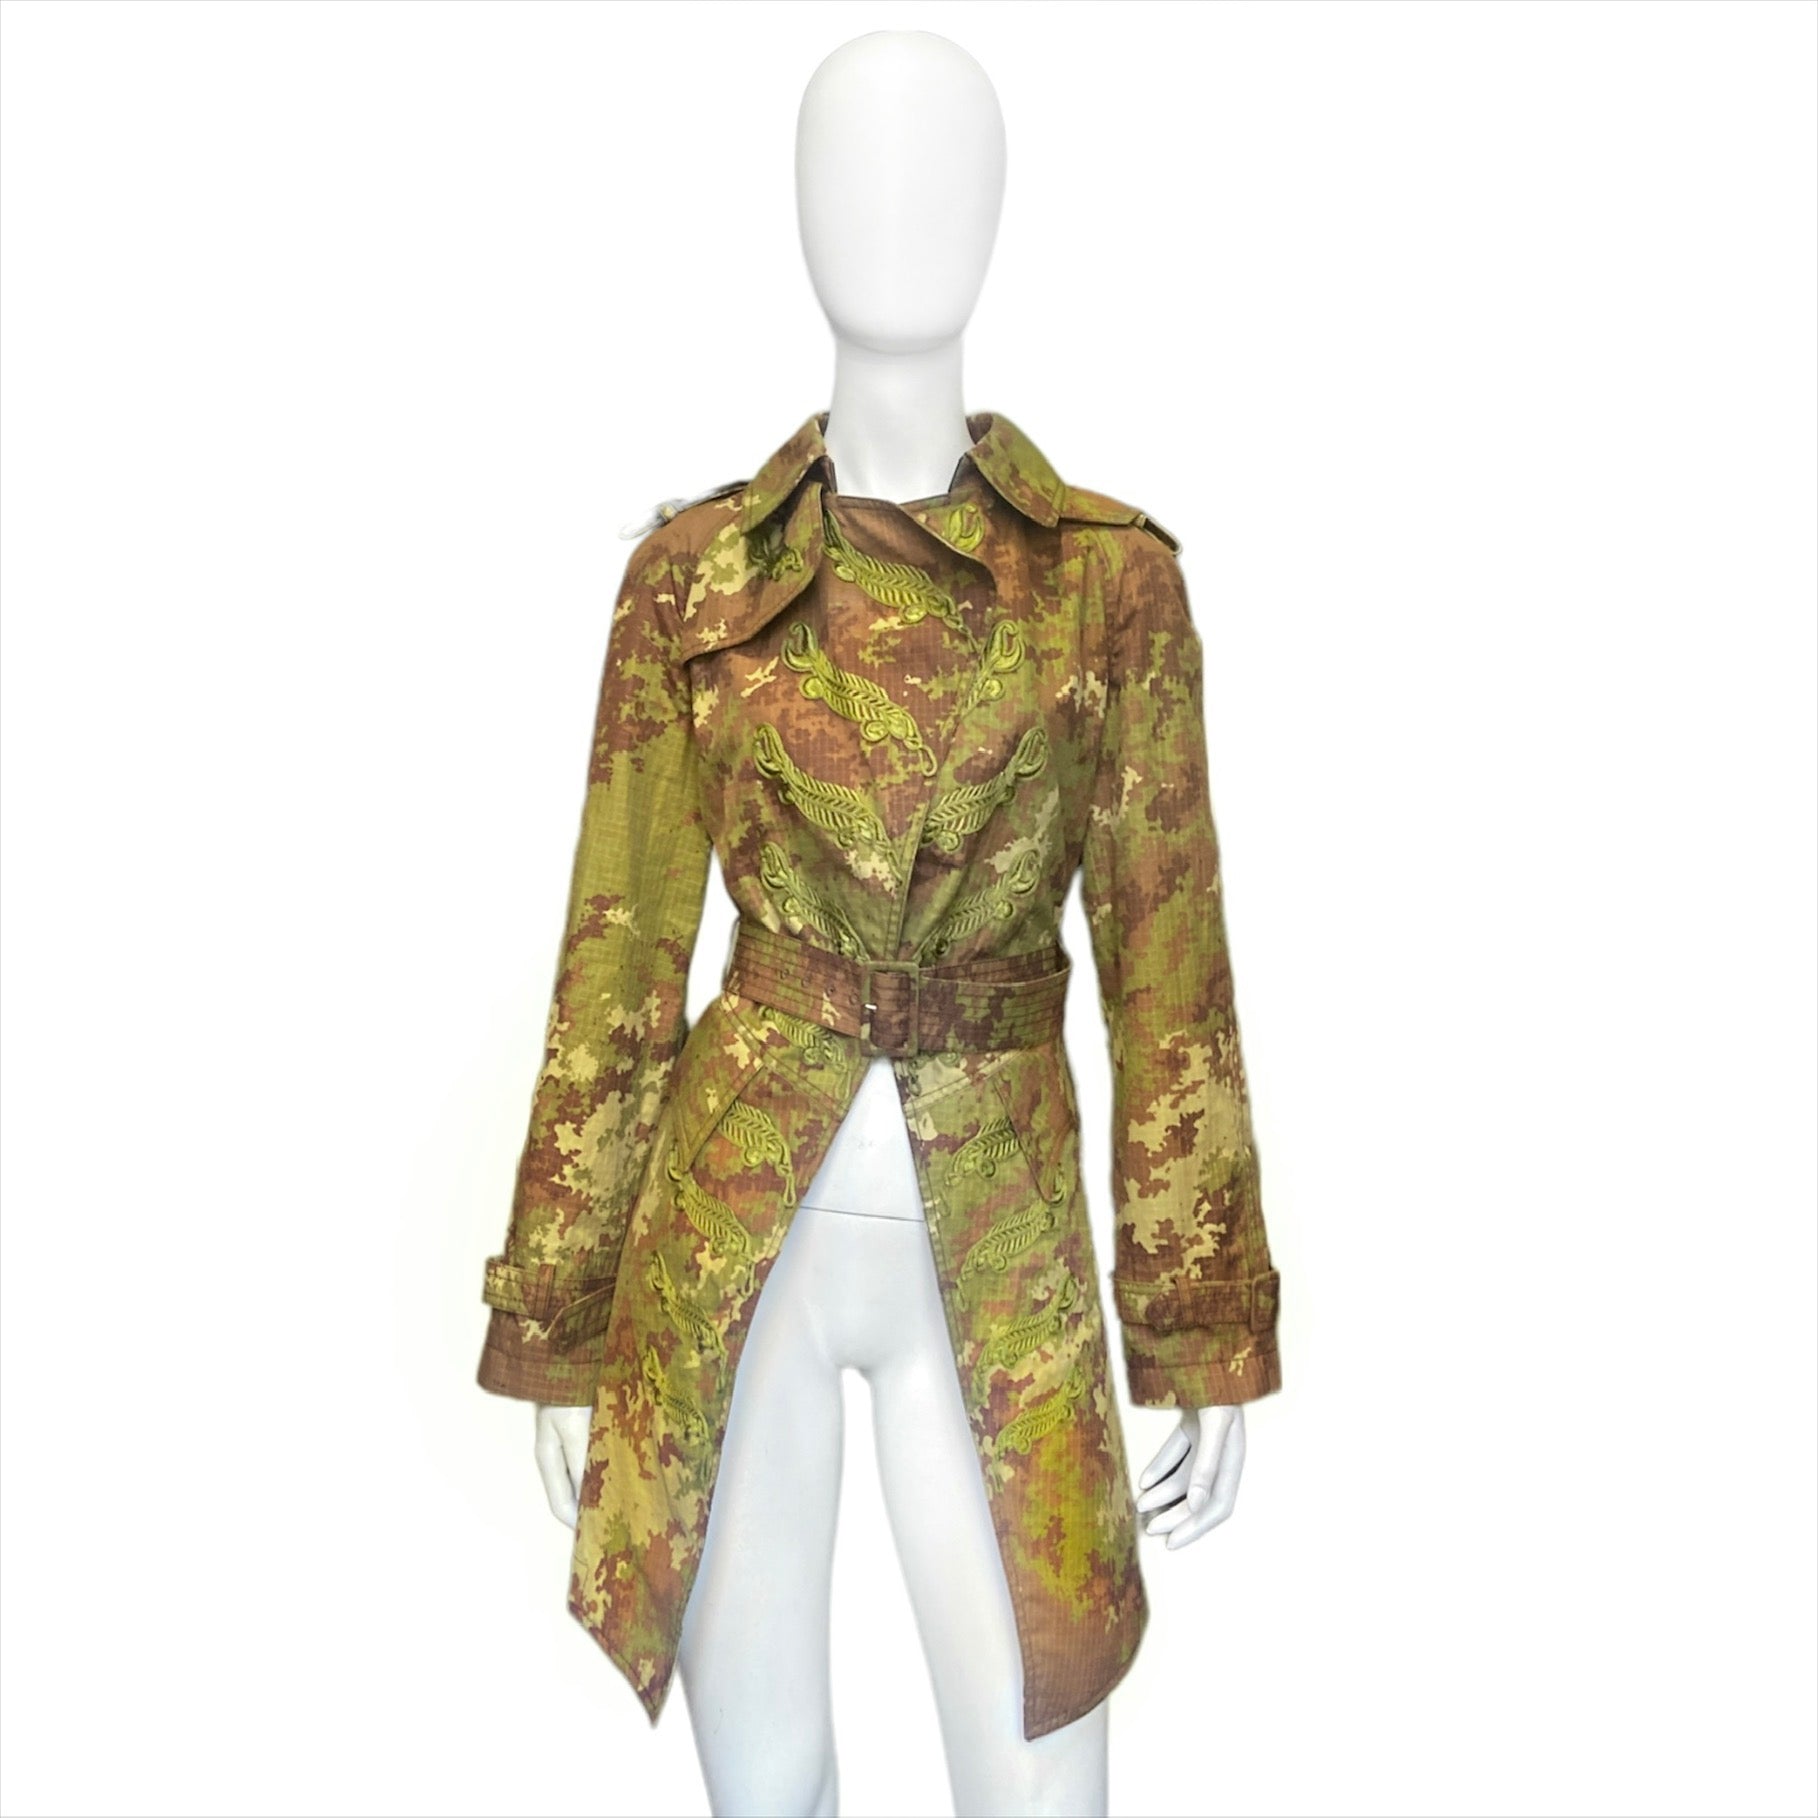 Jean Paul Gaultier Fall 2012 Menswear Collection